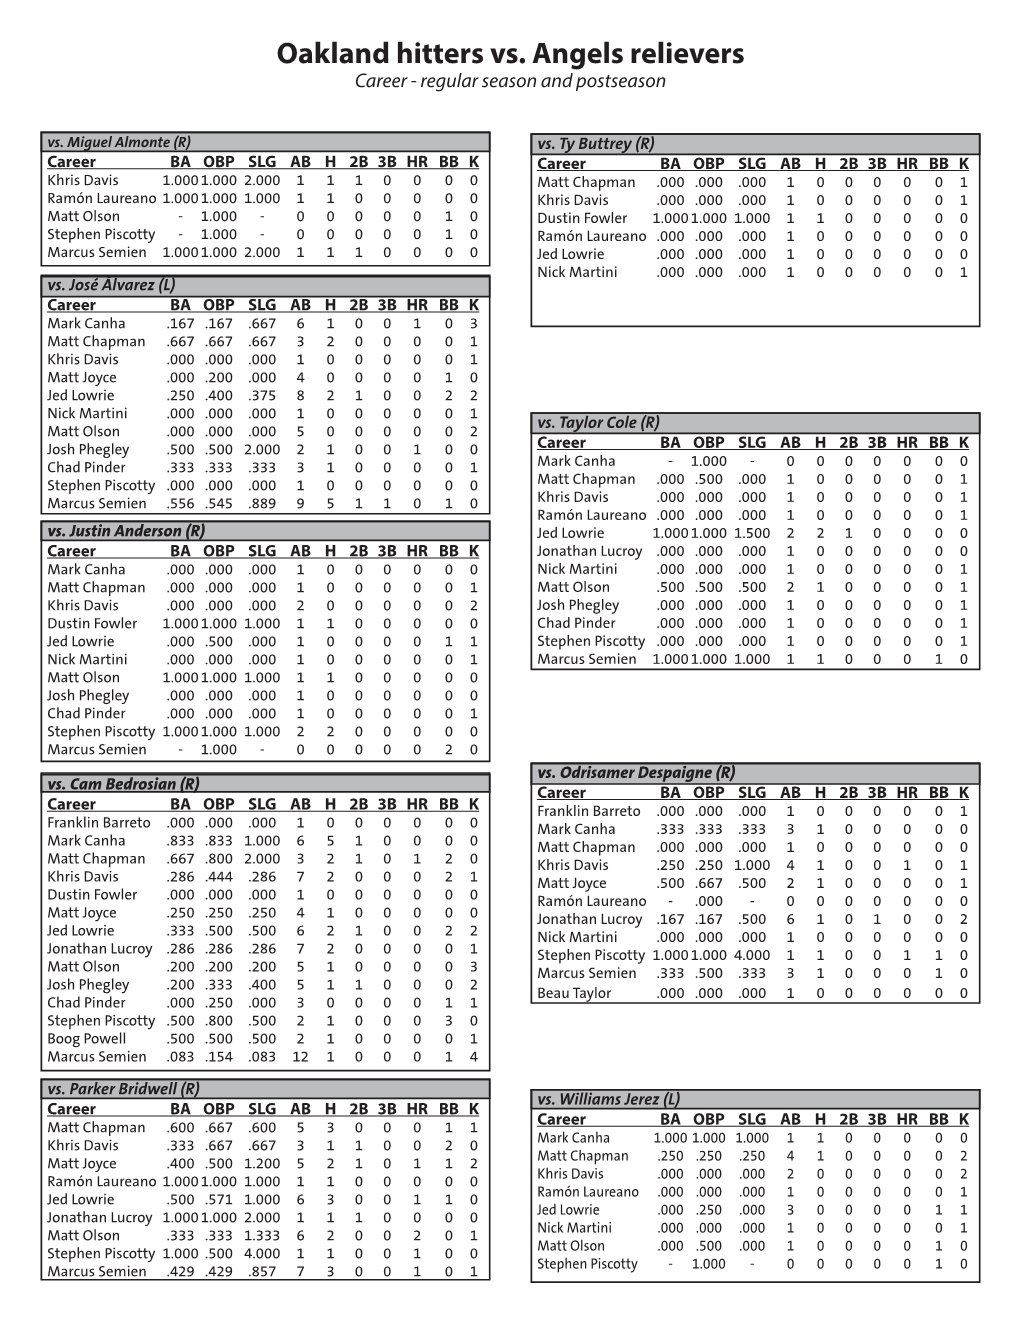 Oakland Hitters Vs. Angels Relievers Career - Regular Season and Postseason Vs